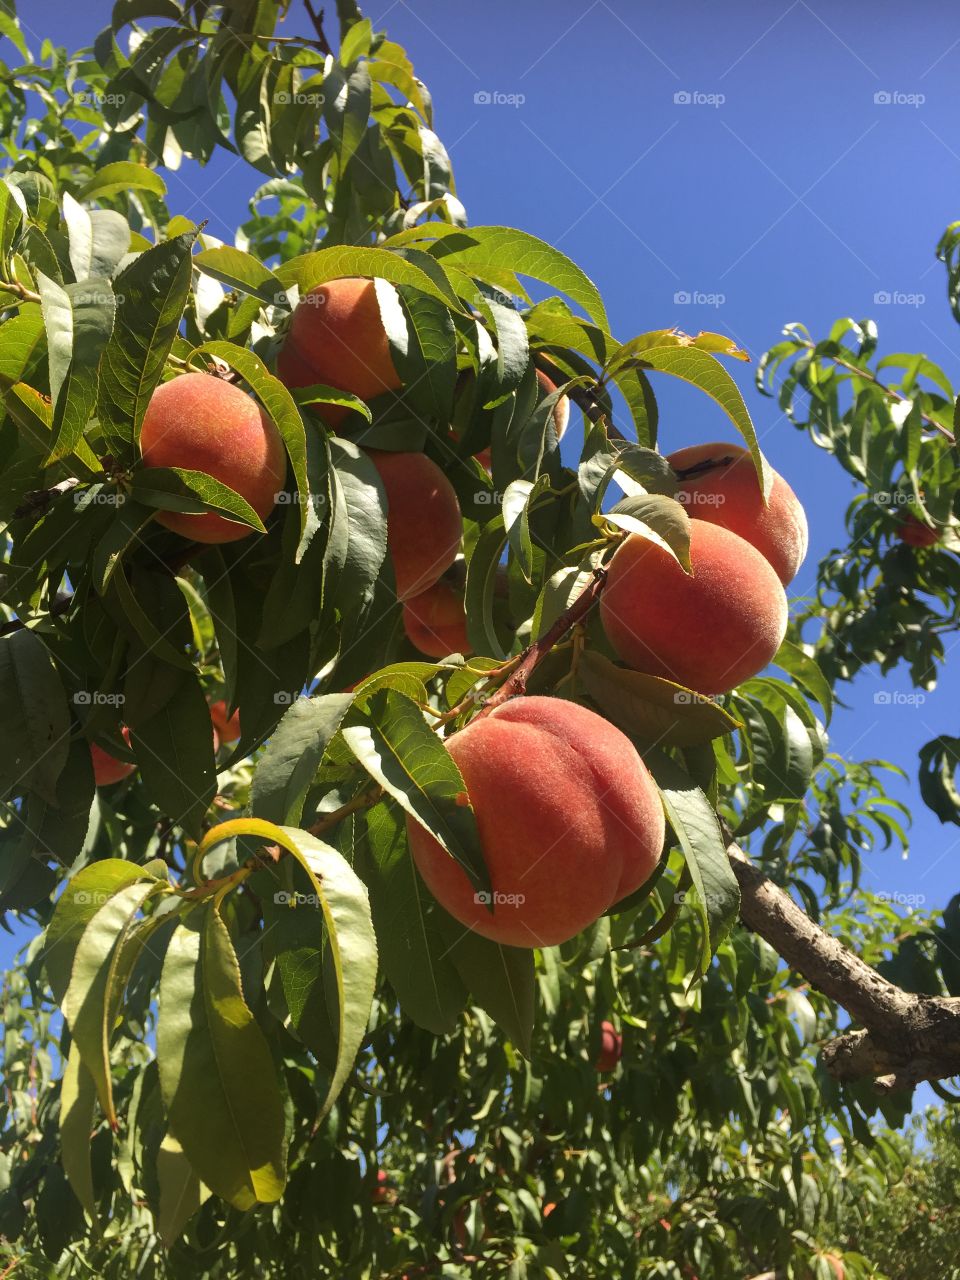 Summertime peach picking 